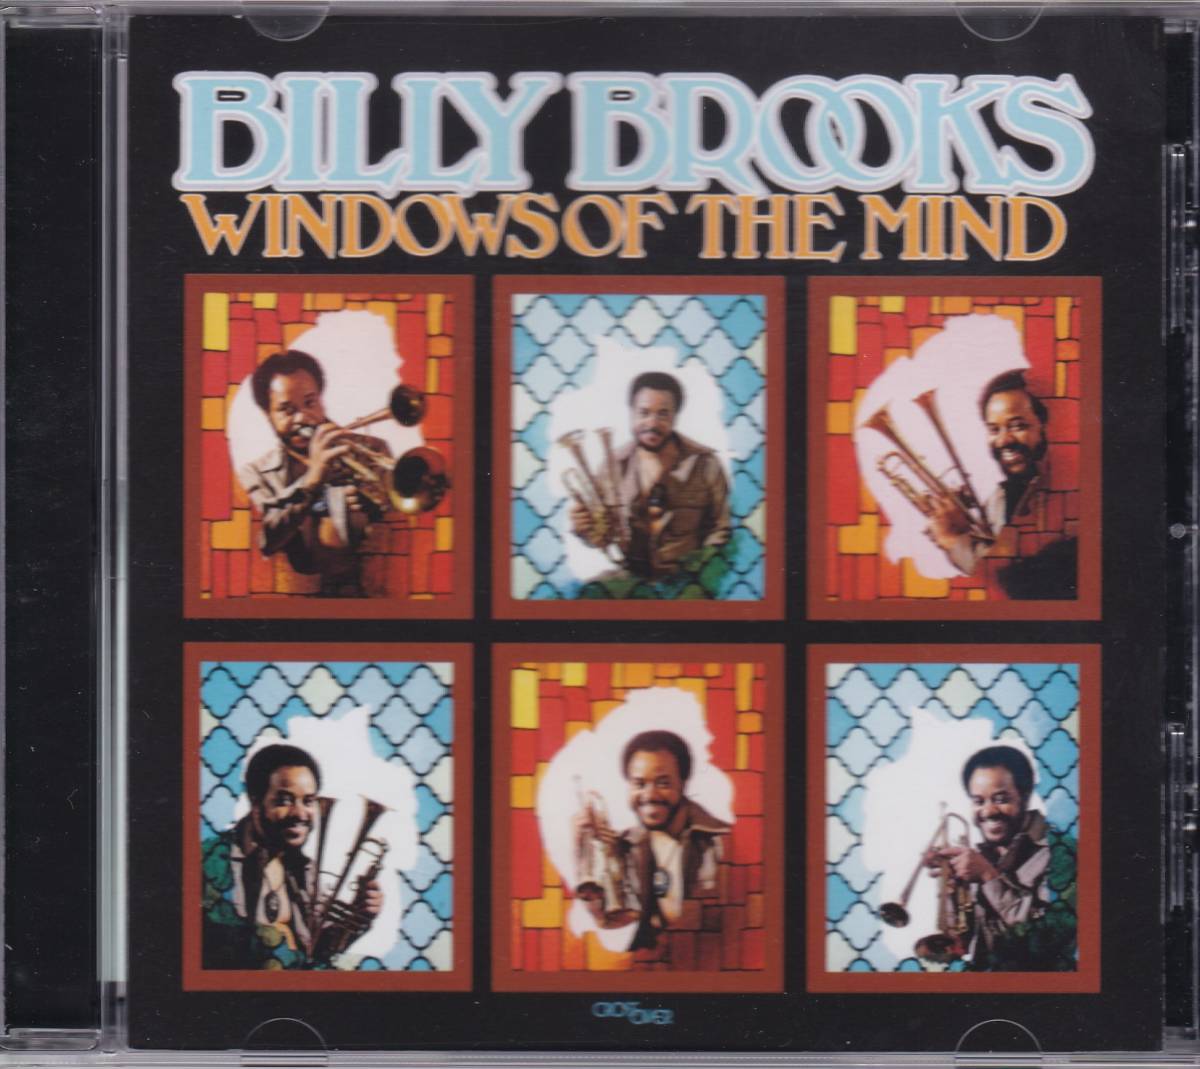 Rare Groove/Jazz Funk■BILLY BROOKS / Windows Of The Mind (1974) 廃盤 AtoZディスクガイド掲載作!! 世界初CD化!! Calvin Keys(g)共演の画像1